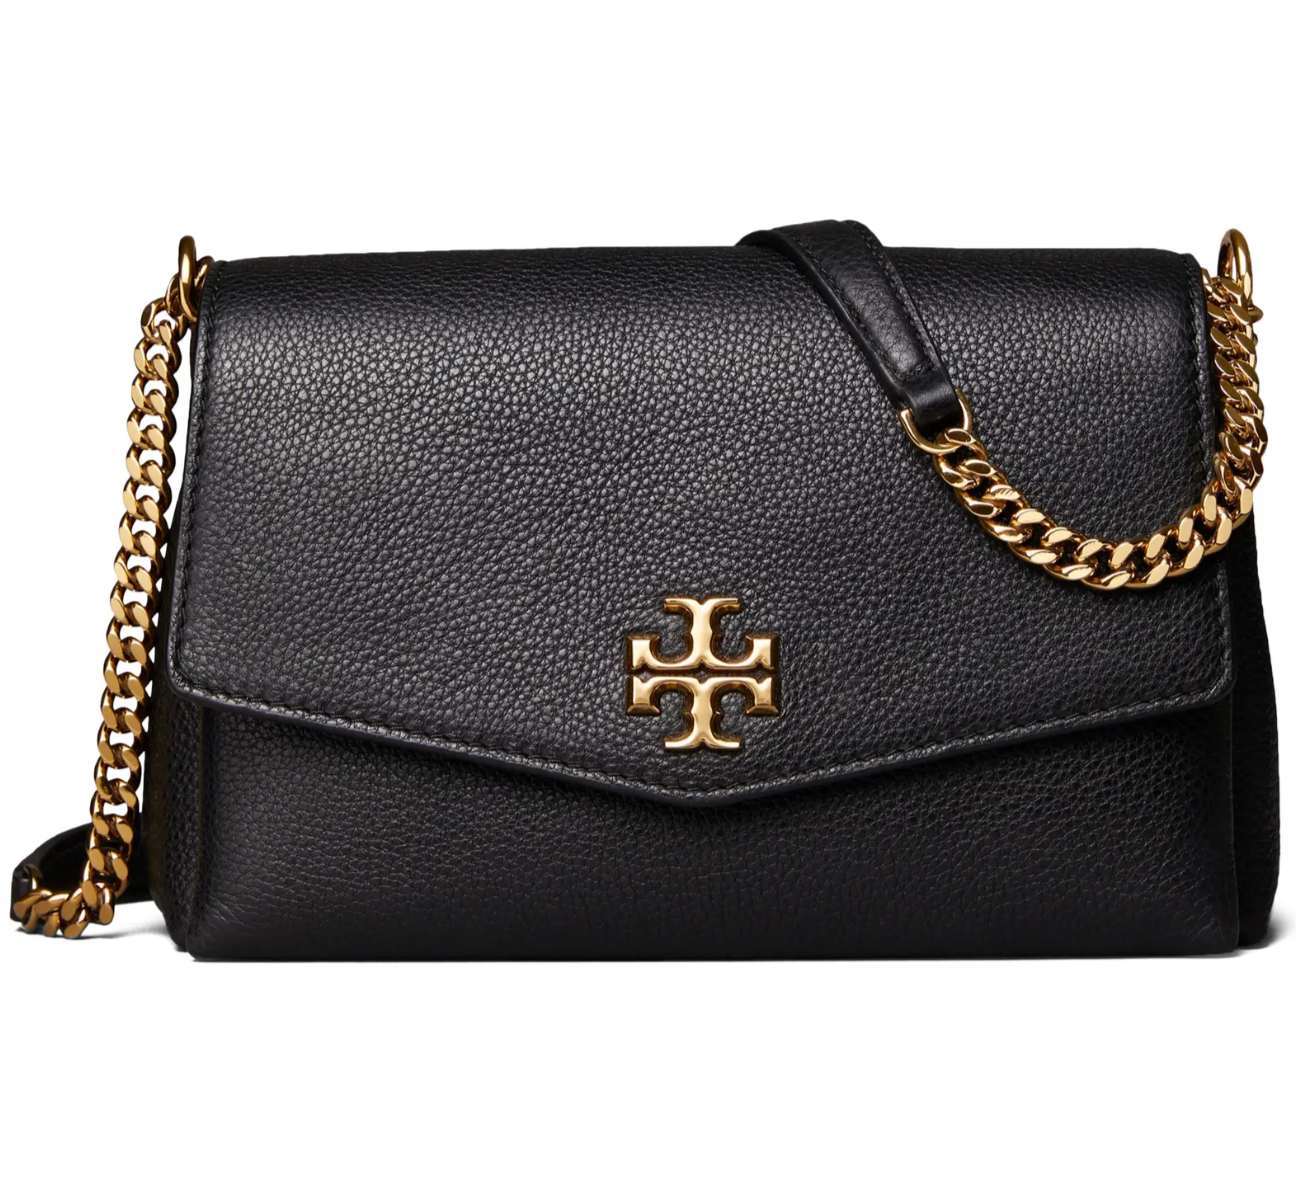 Tory Burch + Small Kira Leather Convertible Crossbody Bag